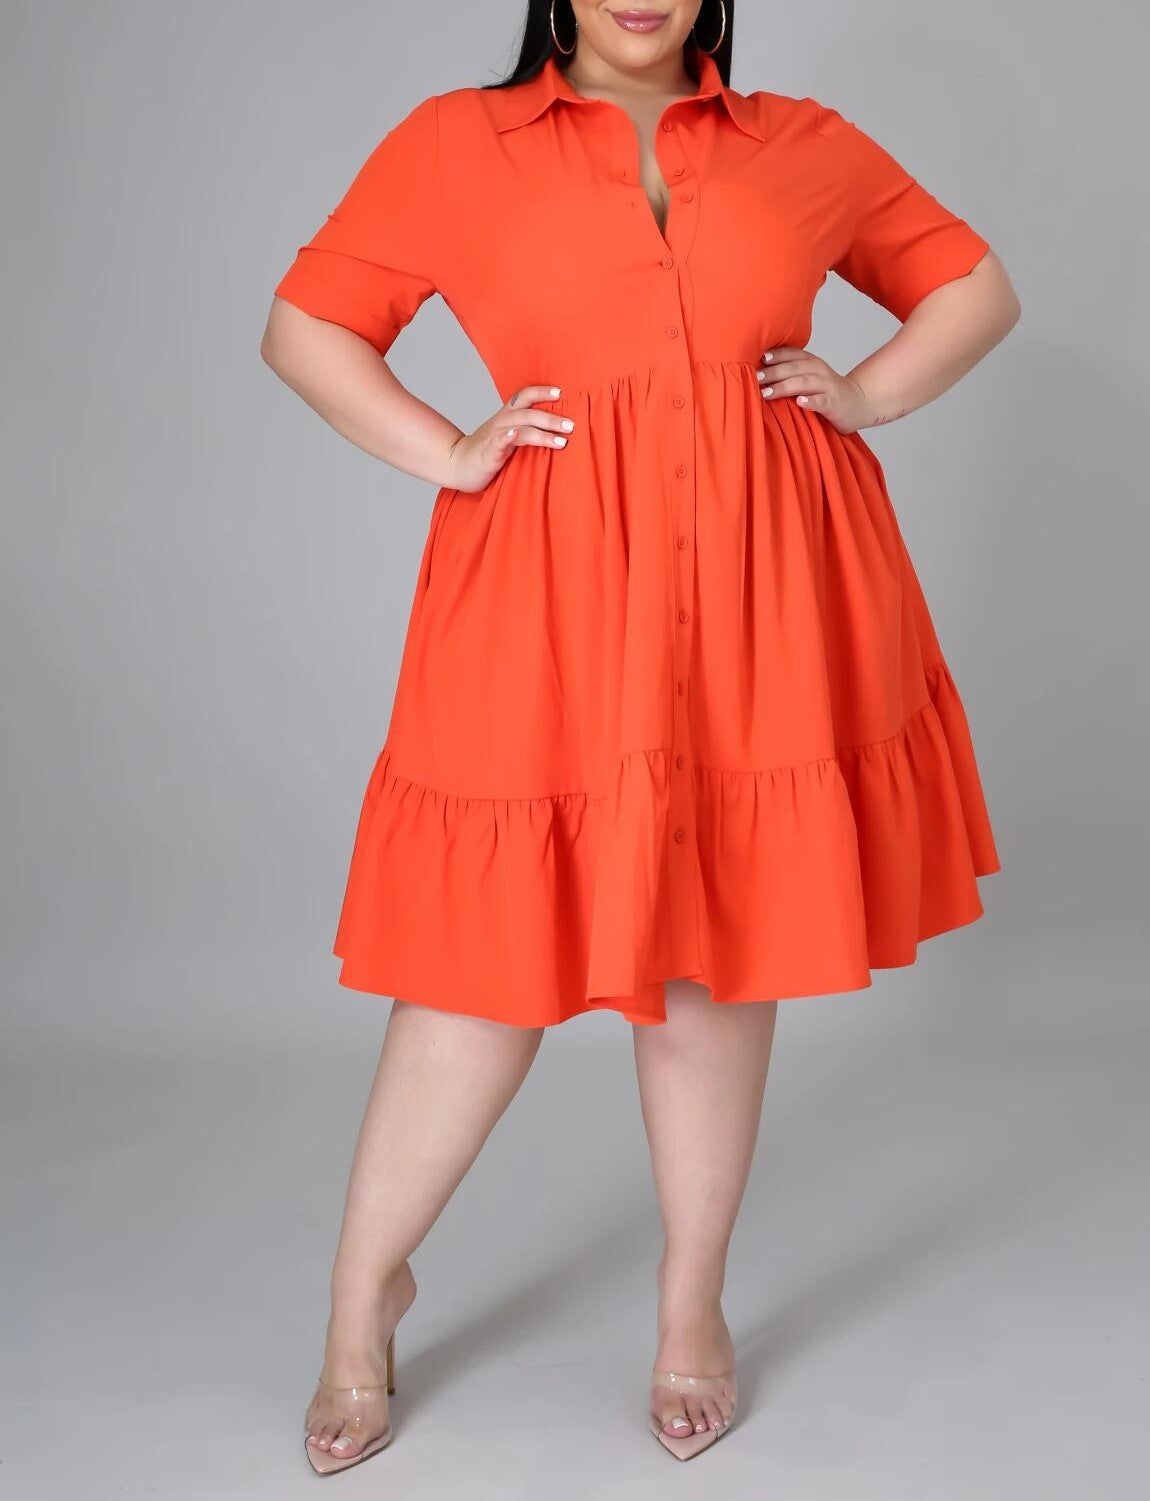 Solid Color Large Size Women's Short Sleeve Shirt Dress